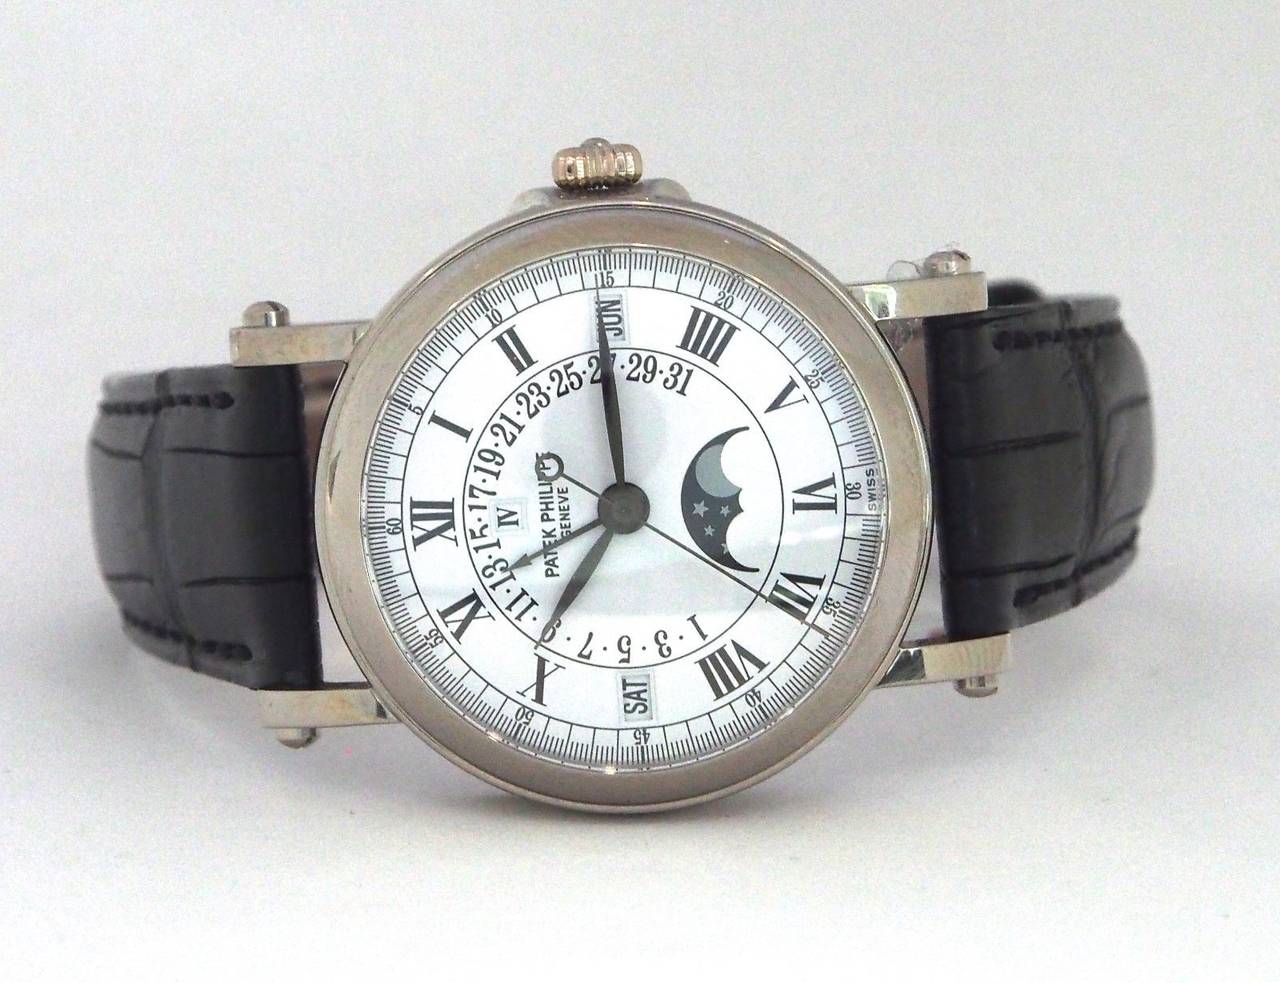 Patek Philippe White Gold 5059G Perpetual Calendar Retrograde Wristwatch 1